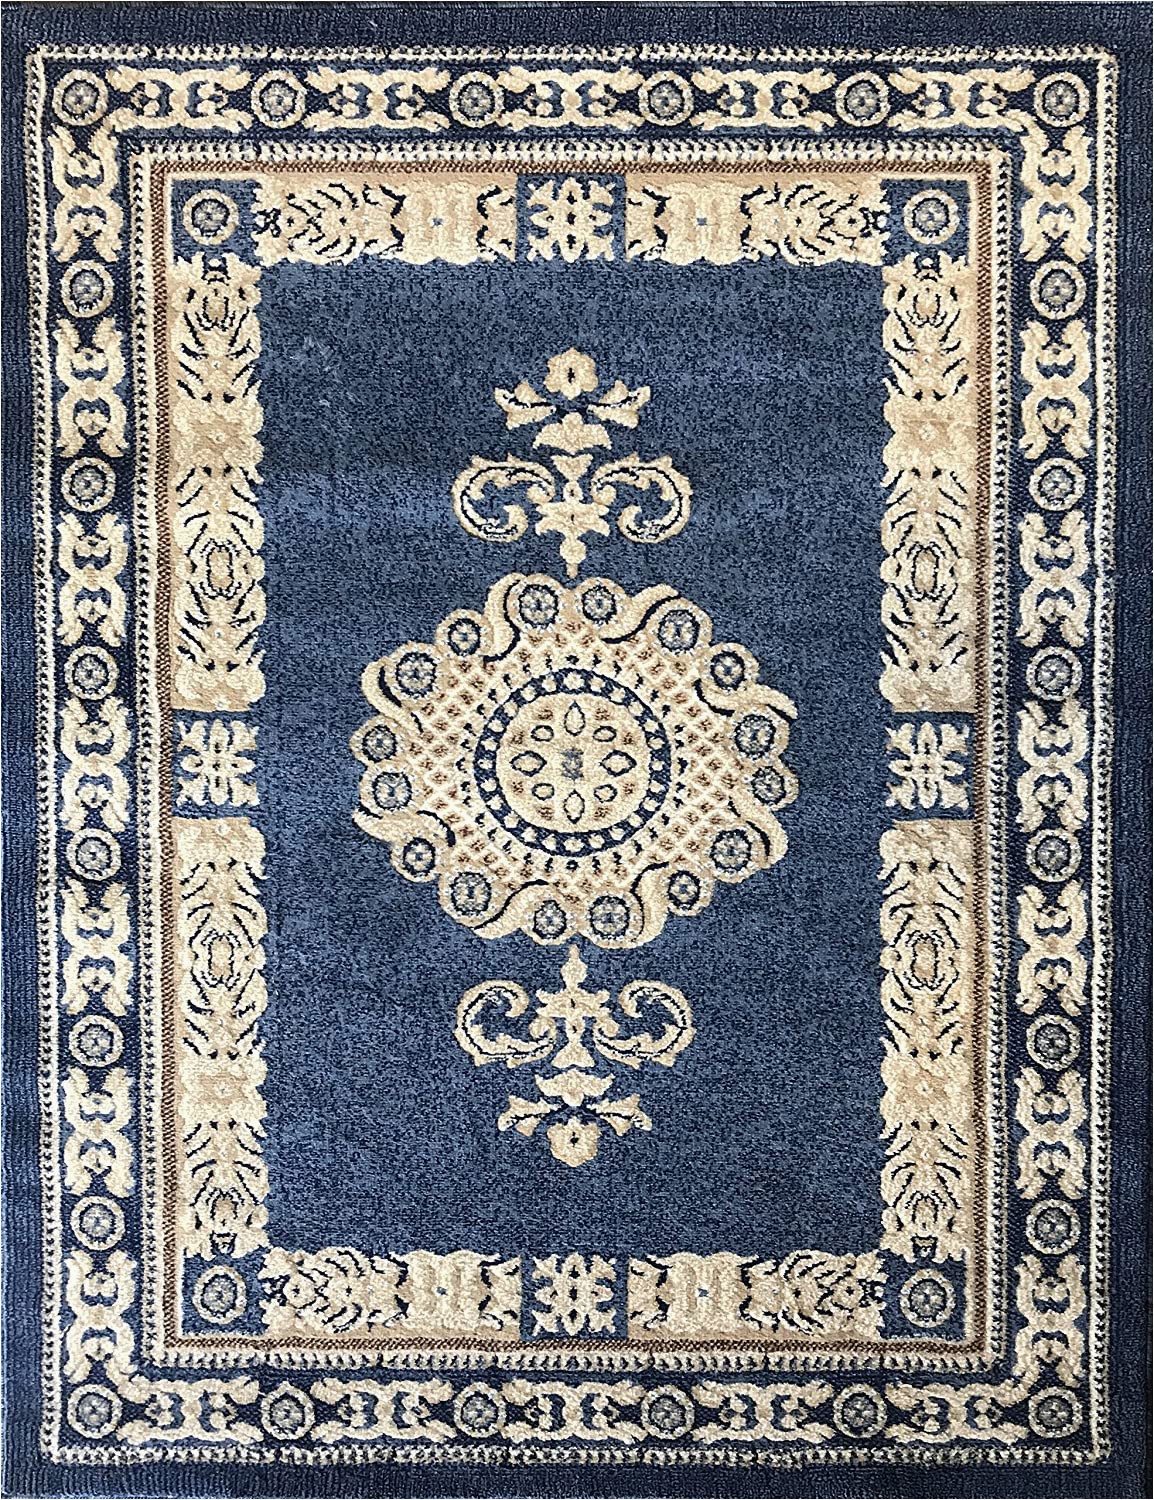 Blue Persian area Rug Traditional Persian area Rug Light Blue Beige & Ivory Carpet King Design 121 4 Feet X 5 Feet 3 Inch